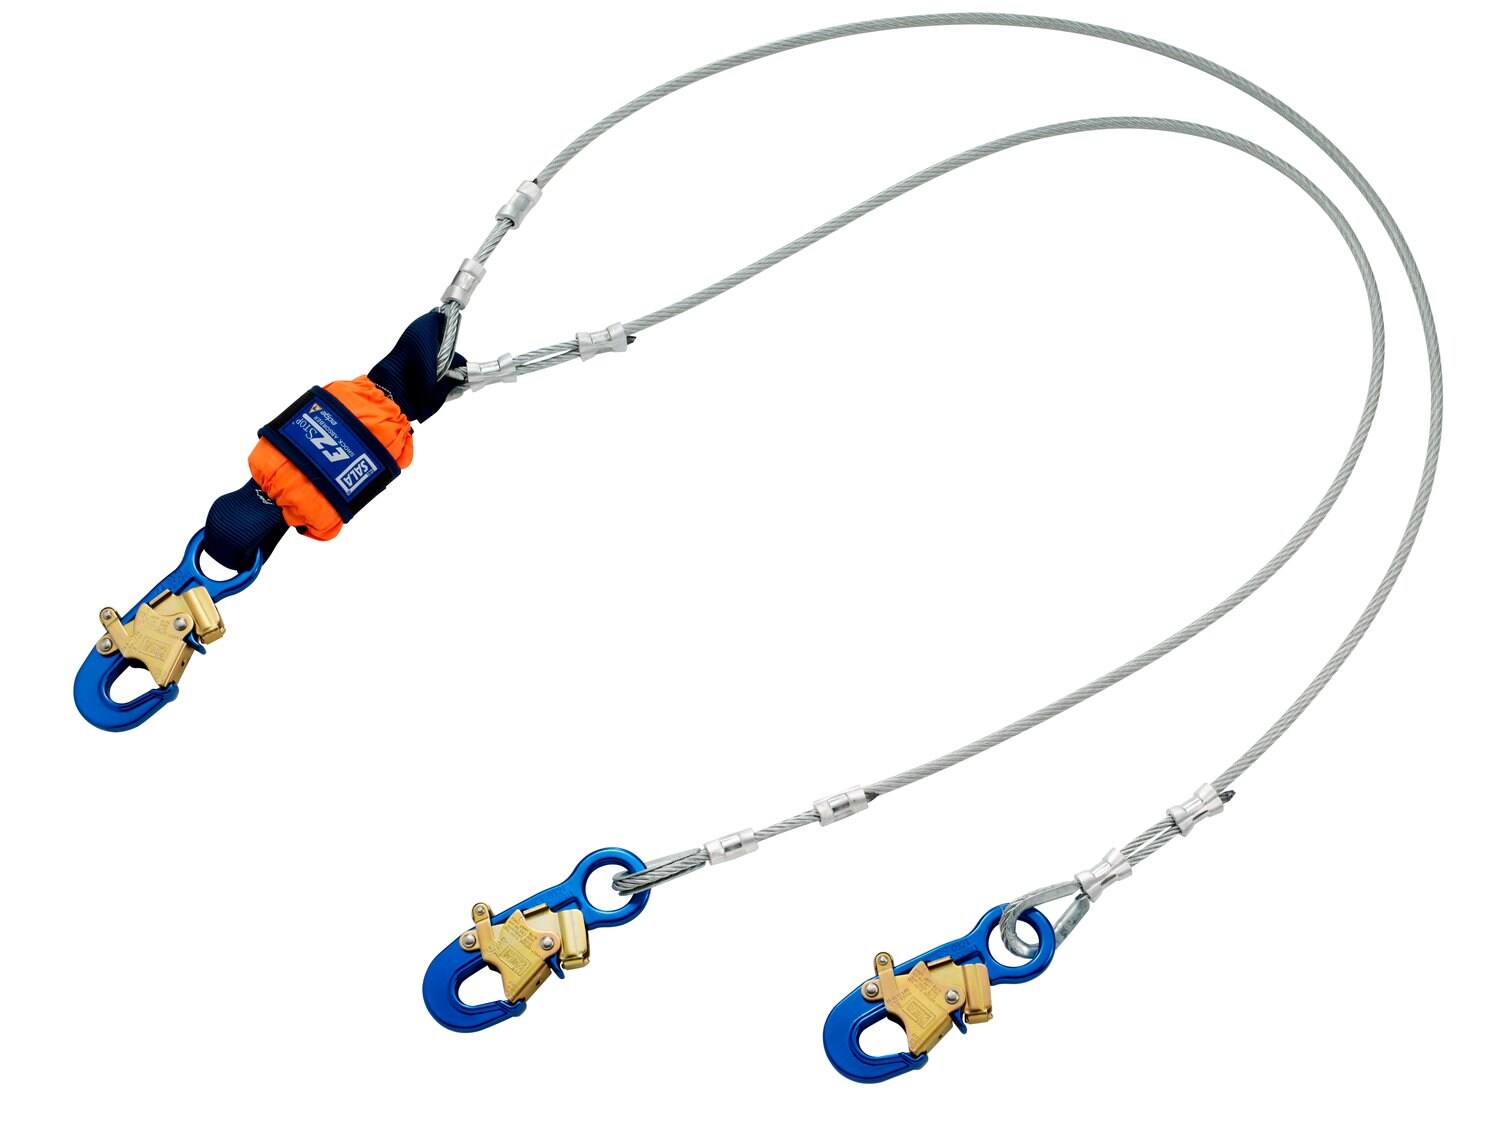 7100237573 - 3M DBI-SALA EZ-Stop Leading Edge 100% Tie-Off Cable Shock-Absorbing Lanyard 1246068, Orange, 6 ft